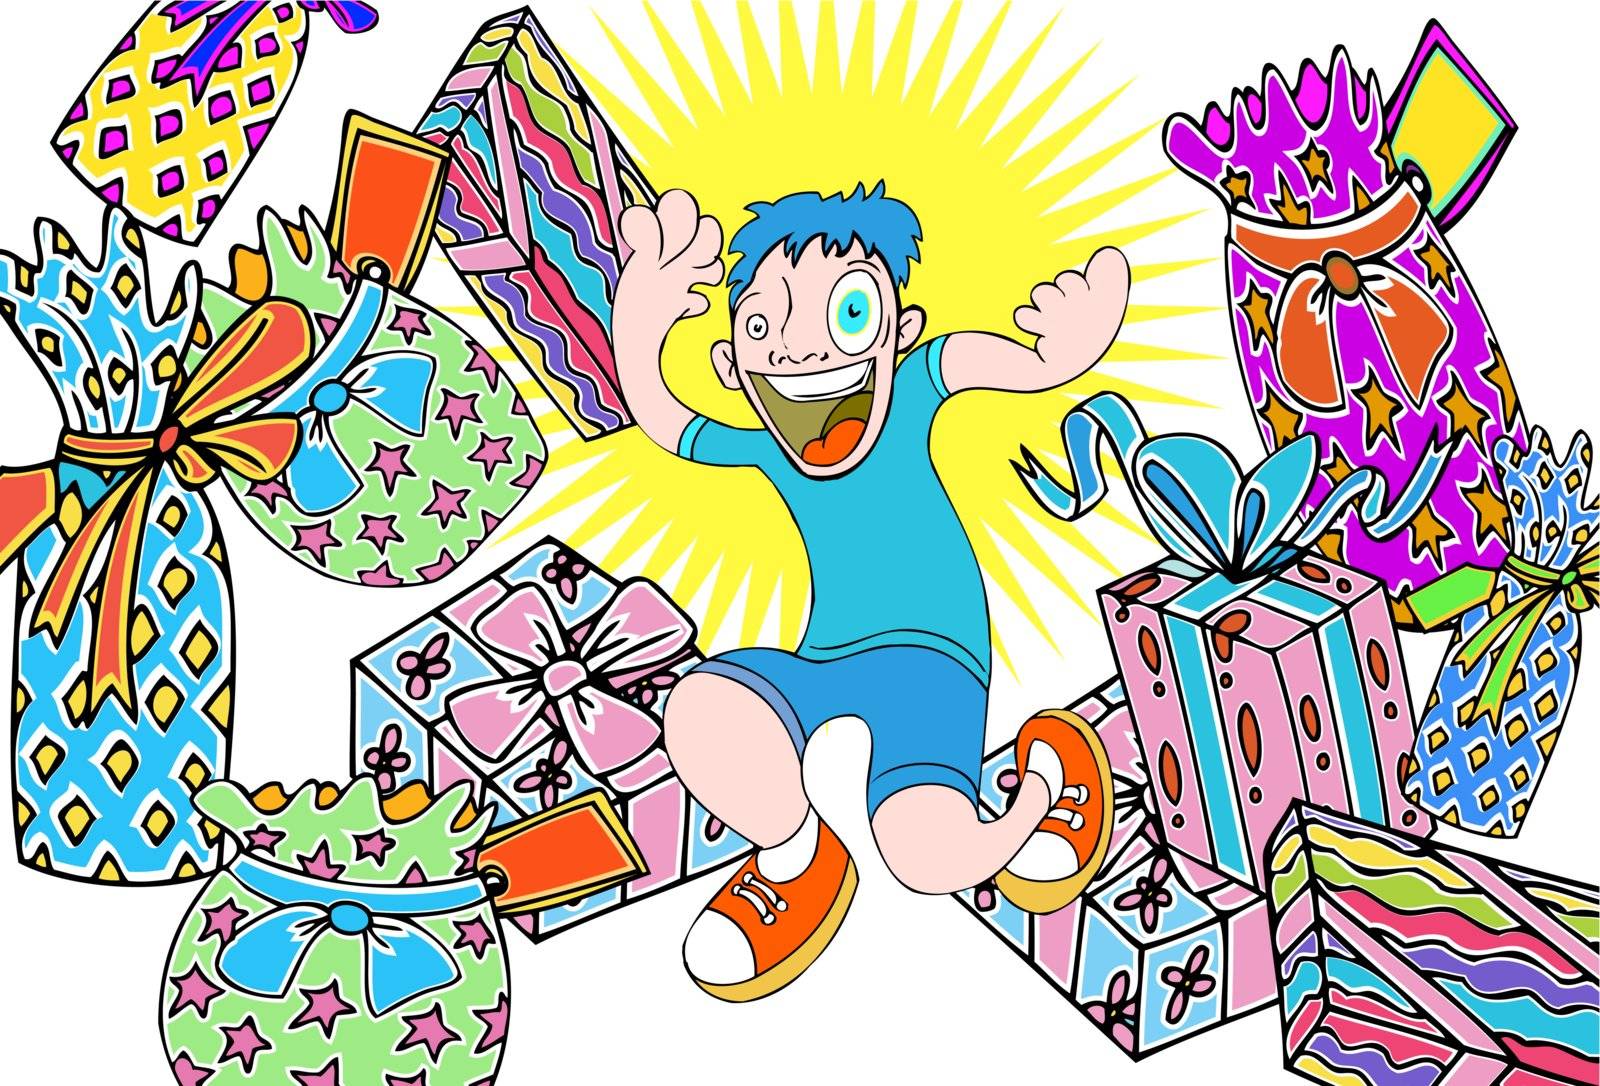 Kid gets so many presents!